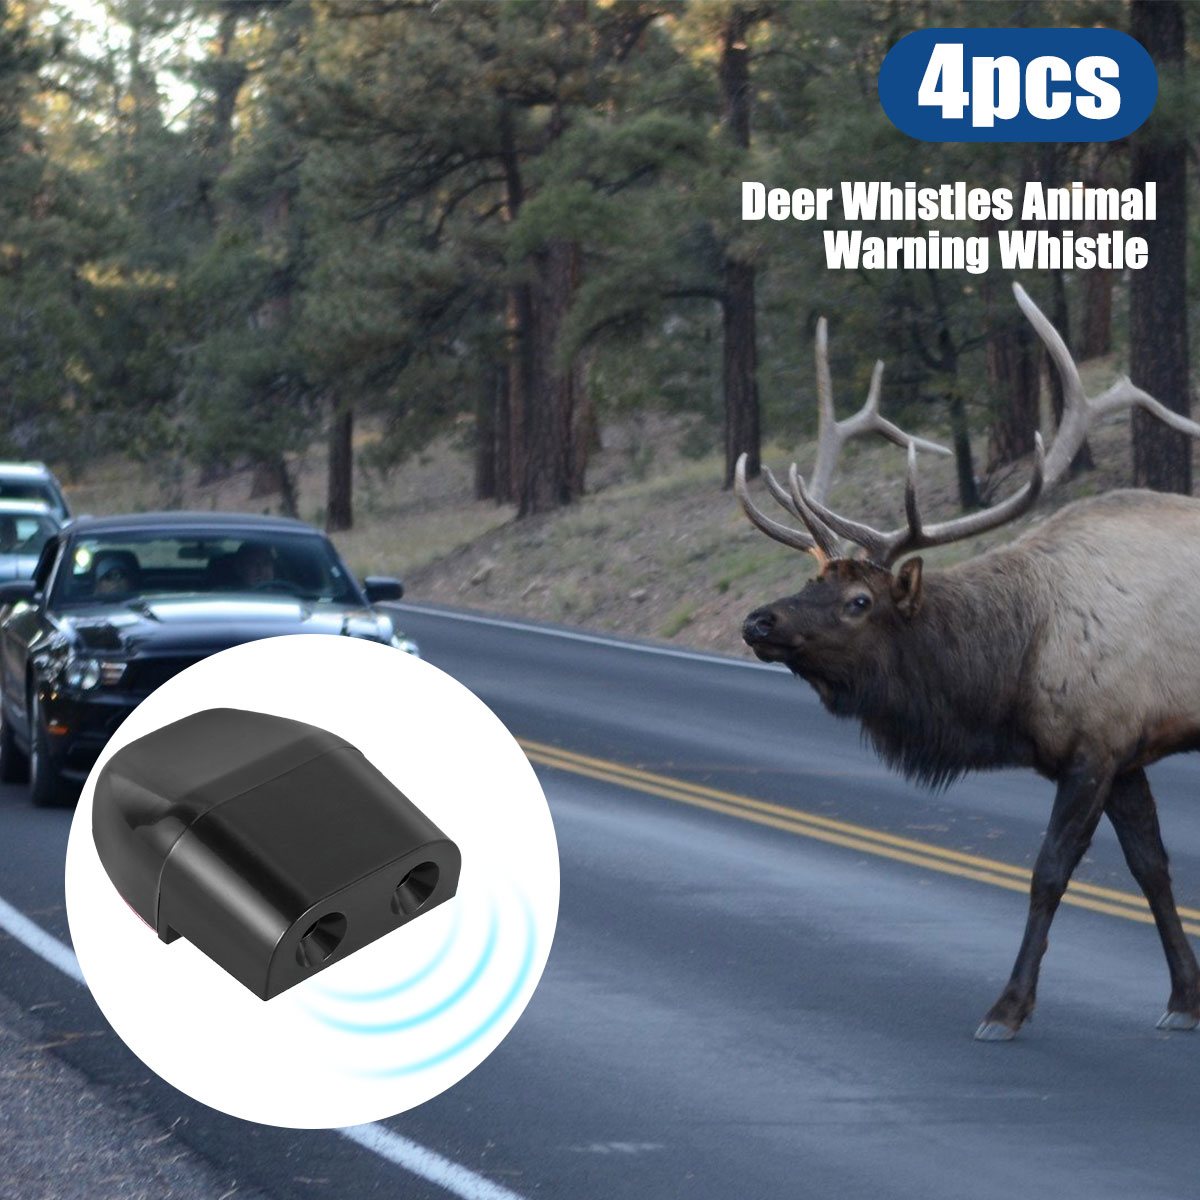 4 Pcs Deer Whistles Animal Warning Whistle Safety Cars Motorcycles Trucks  RVs❅